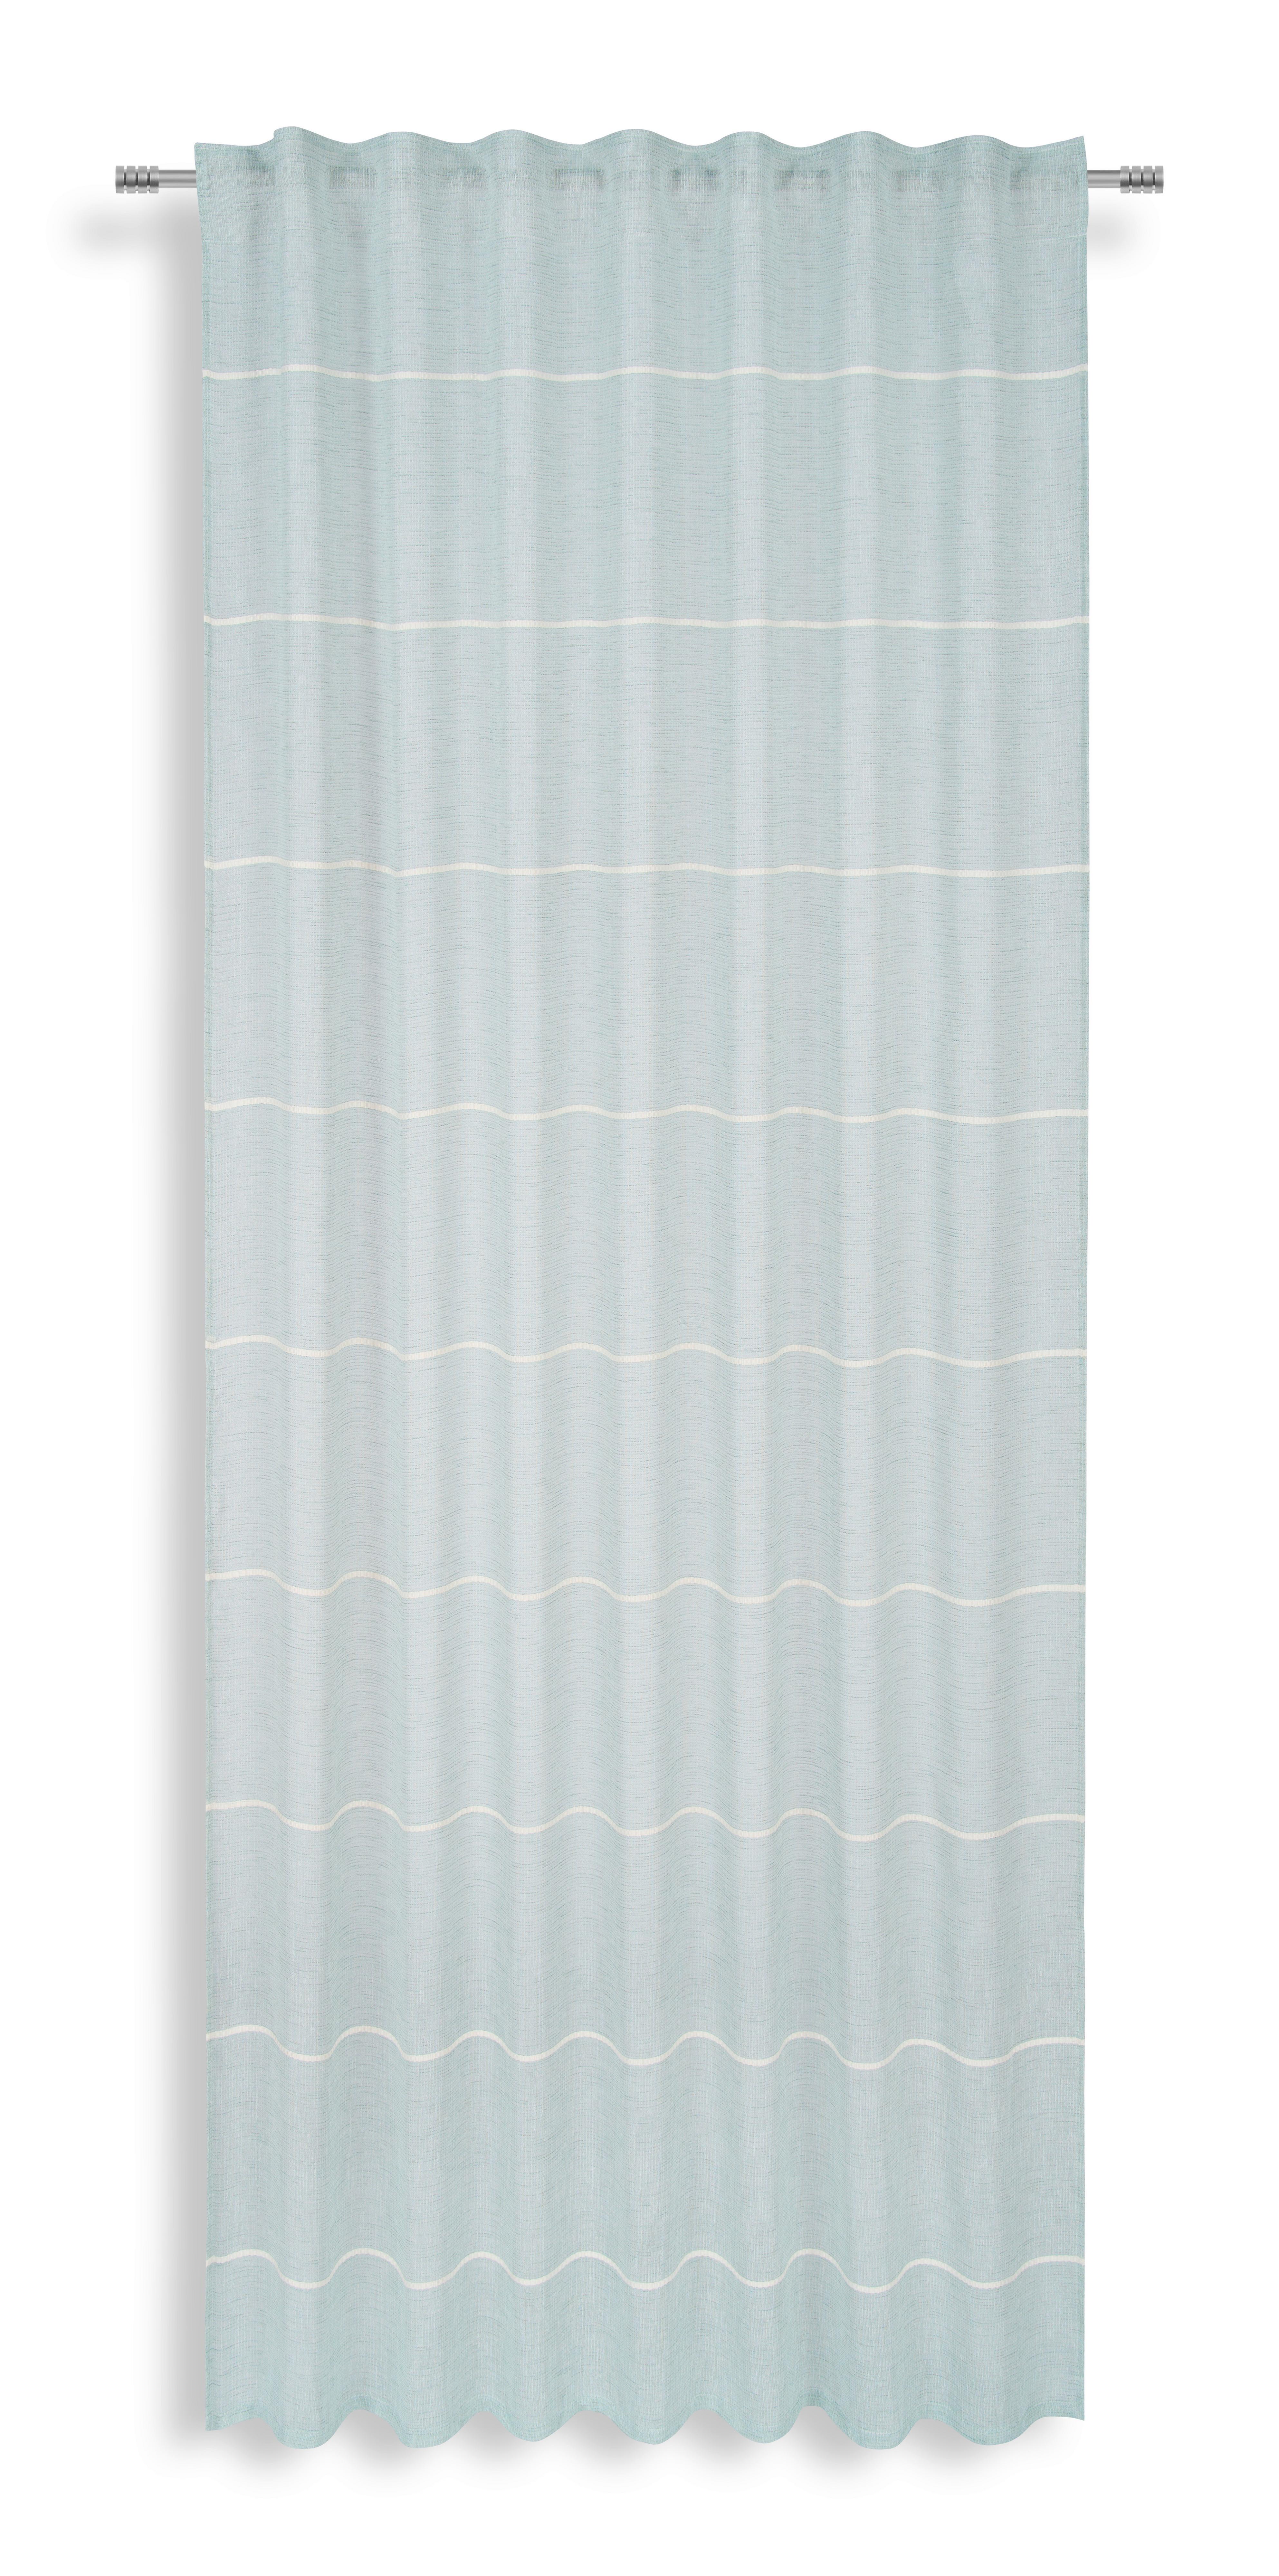 Készfüggöny Esra - Türkiz, modern, Textil (140/245cm) - Luca Bessoni